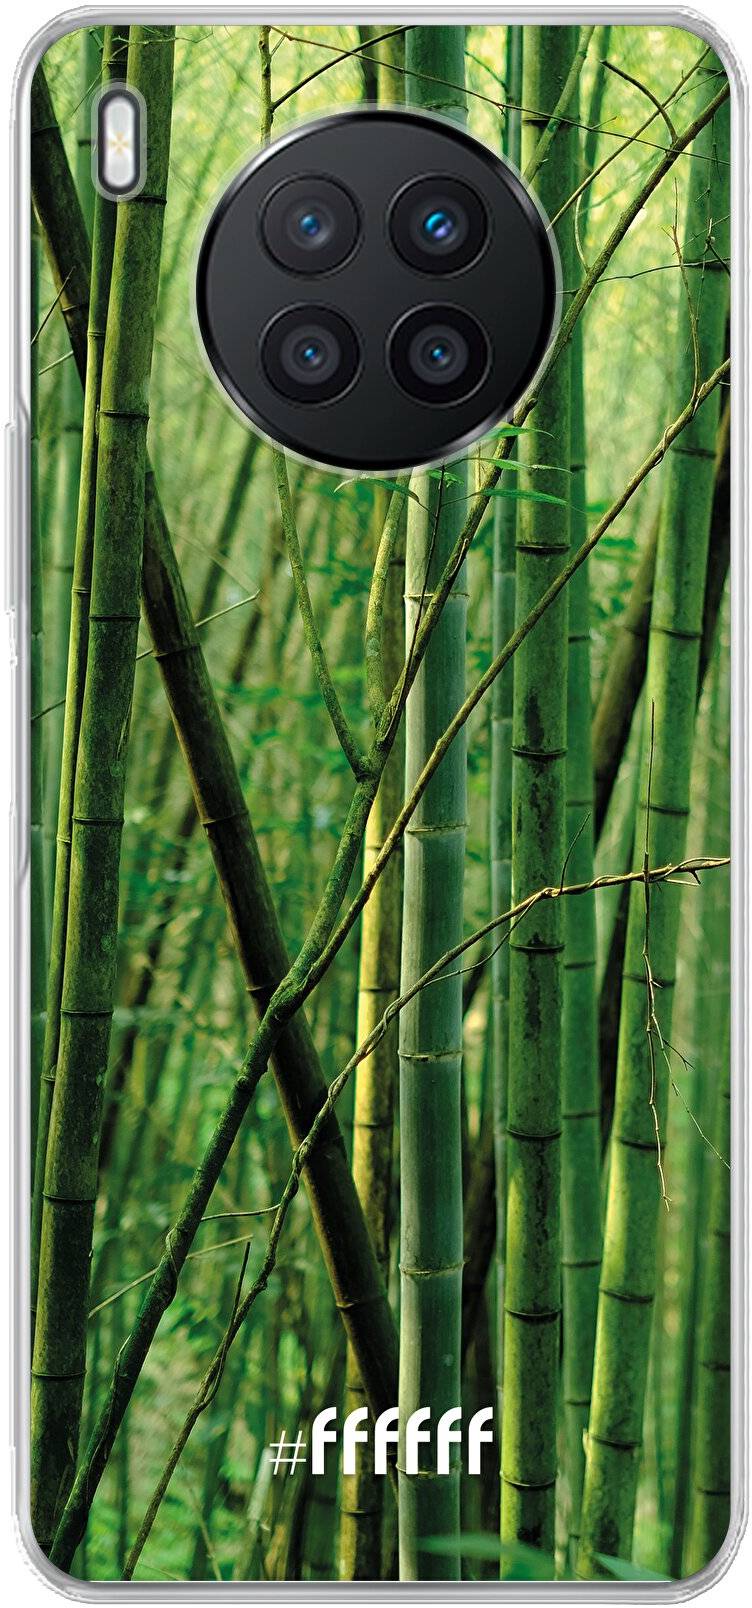 Bamboo Nova 8i